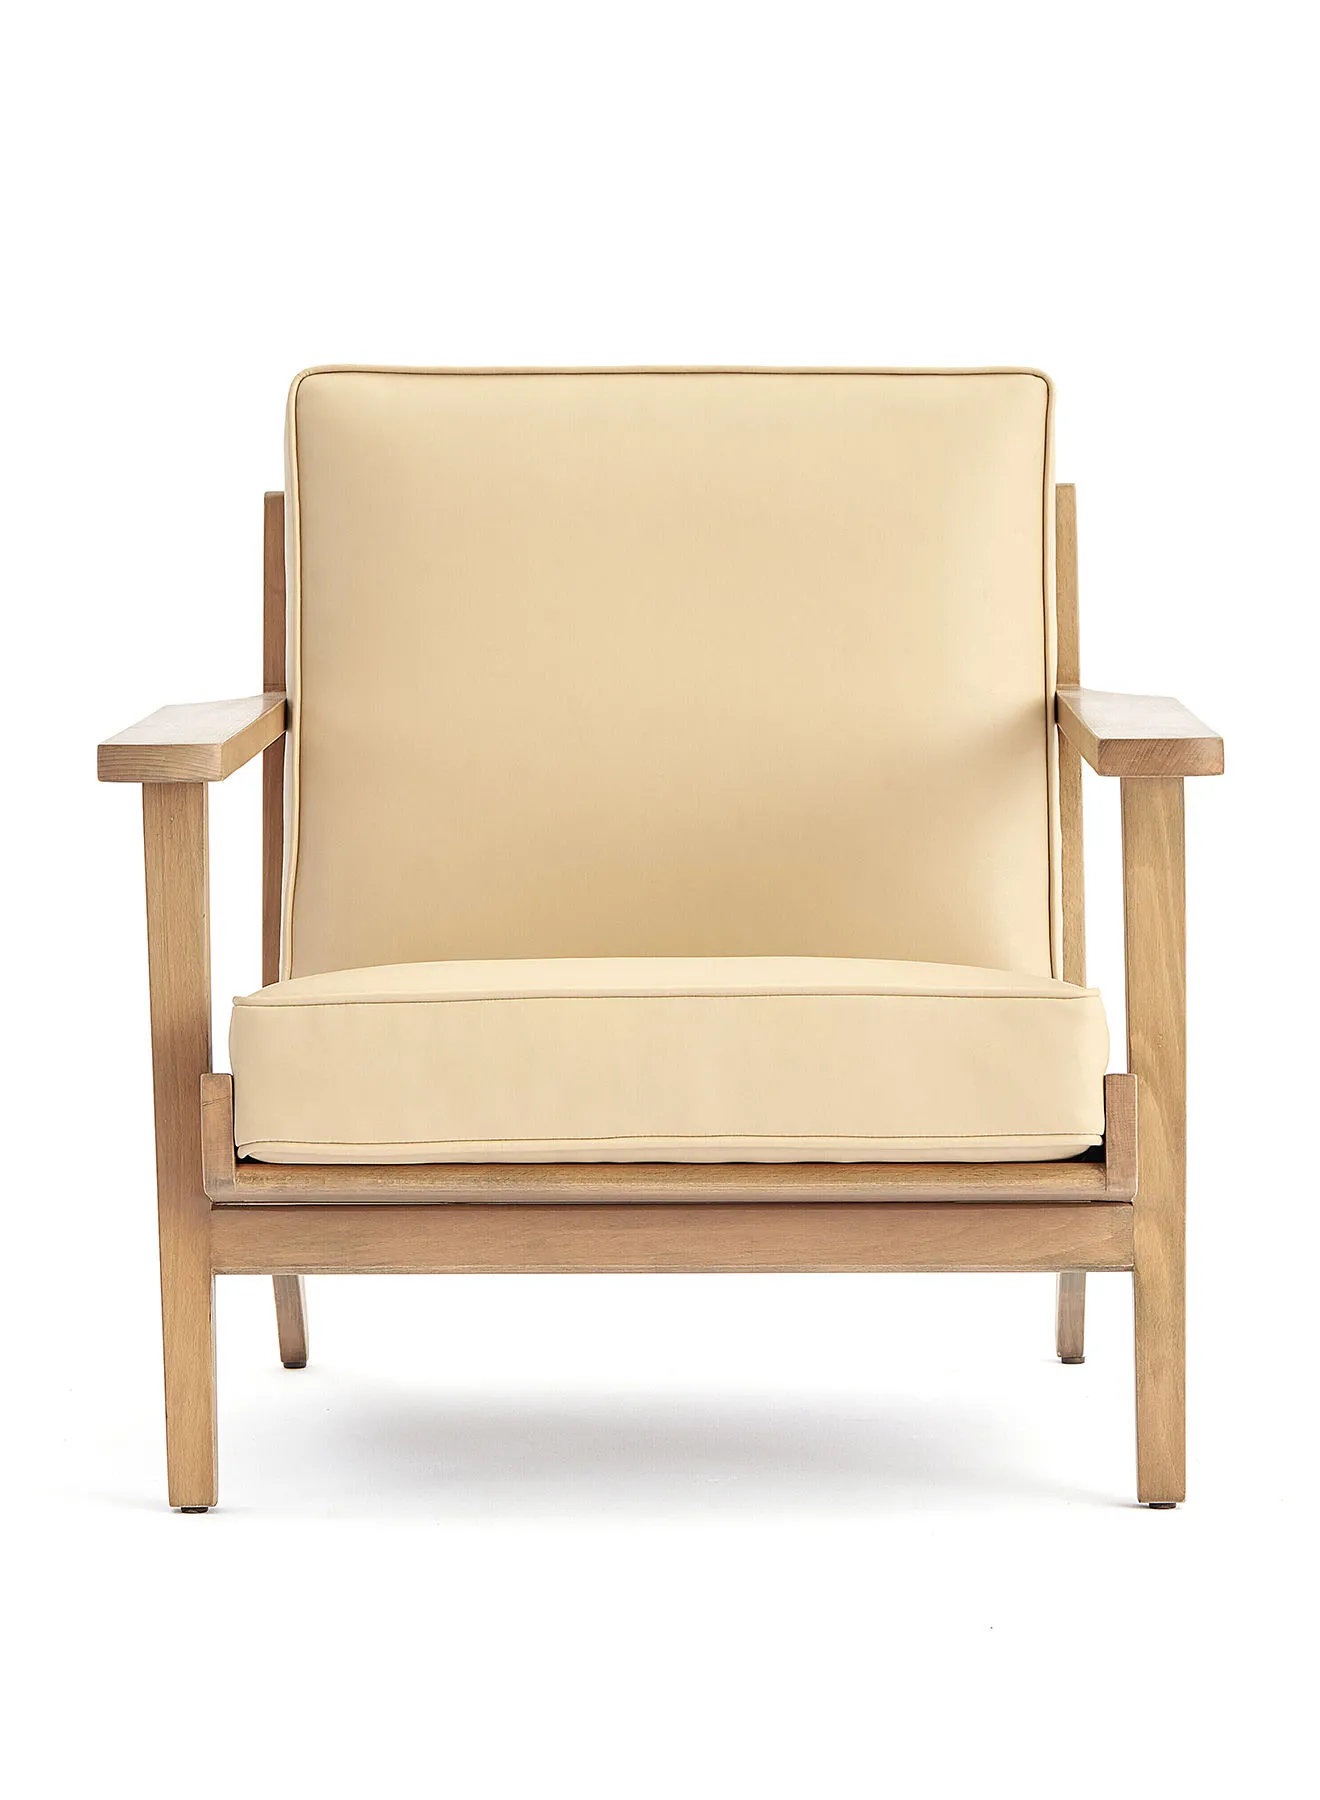 ebb & flow Armchair Luxurious - In Beige Wooden Chair Size 710 X 775 X 725